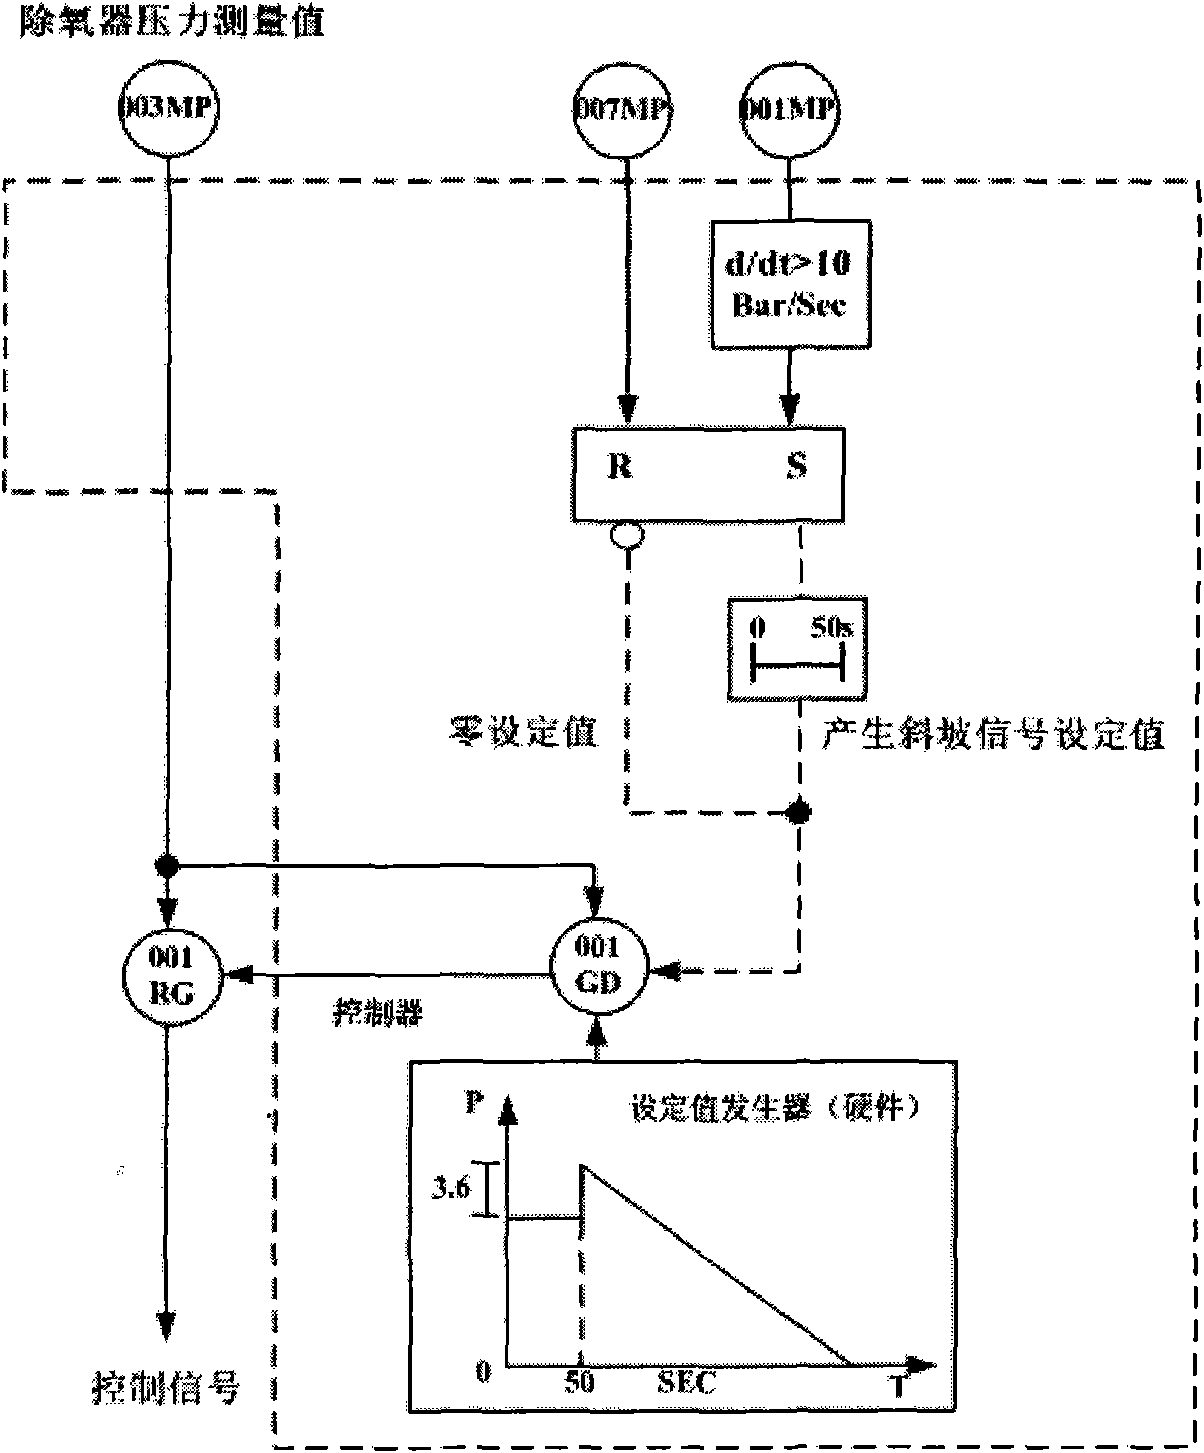 Digital computing method for pressure set value of deaerator of pressurized water reactor nuclear power station